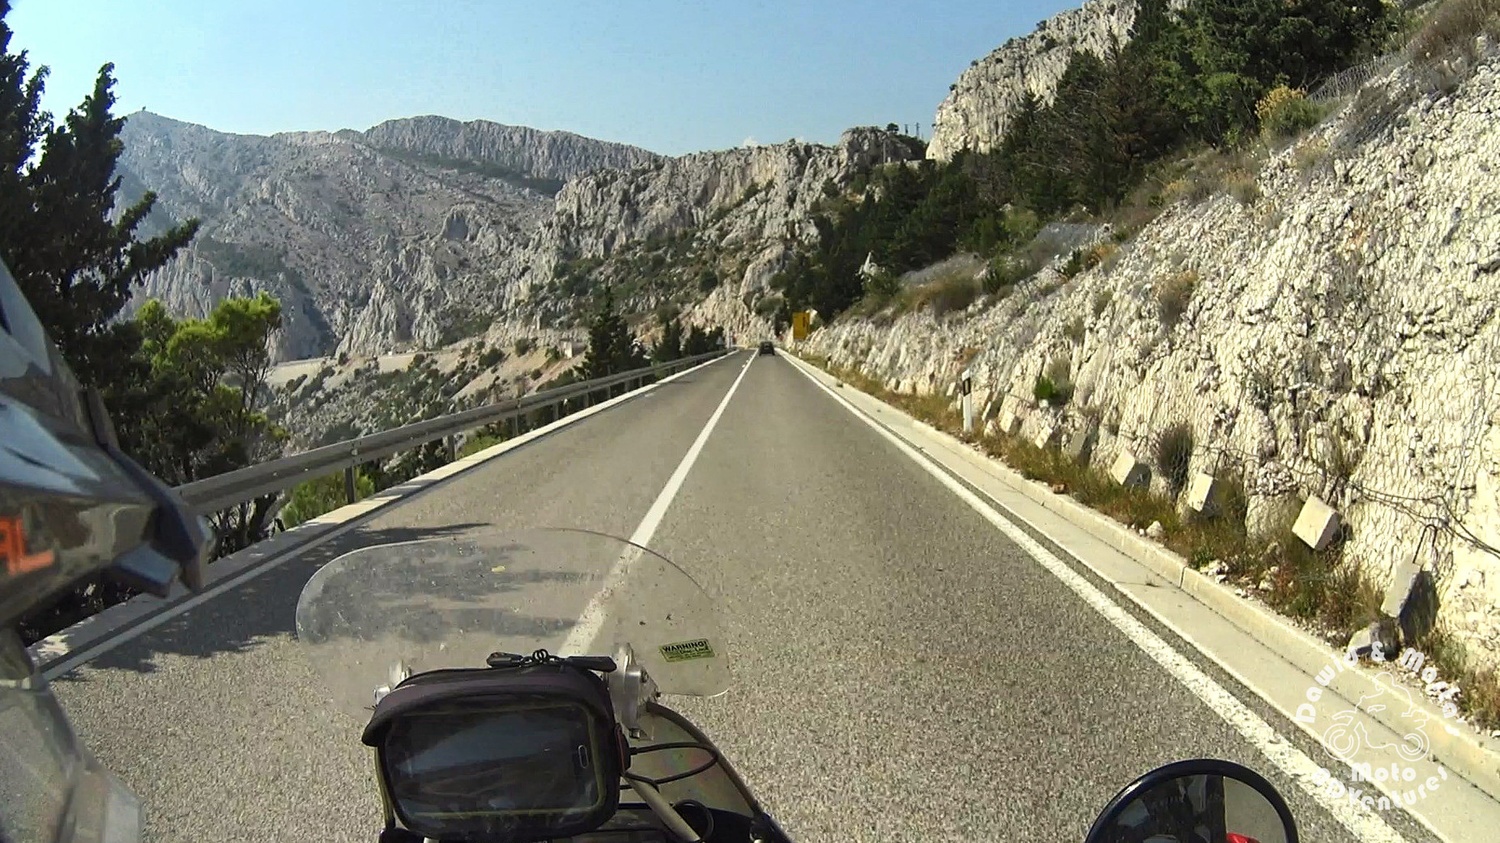 Riding down the Cesta Domovinskog Rata in Croatia to Adriatic Highway